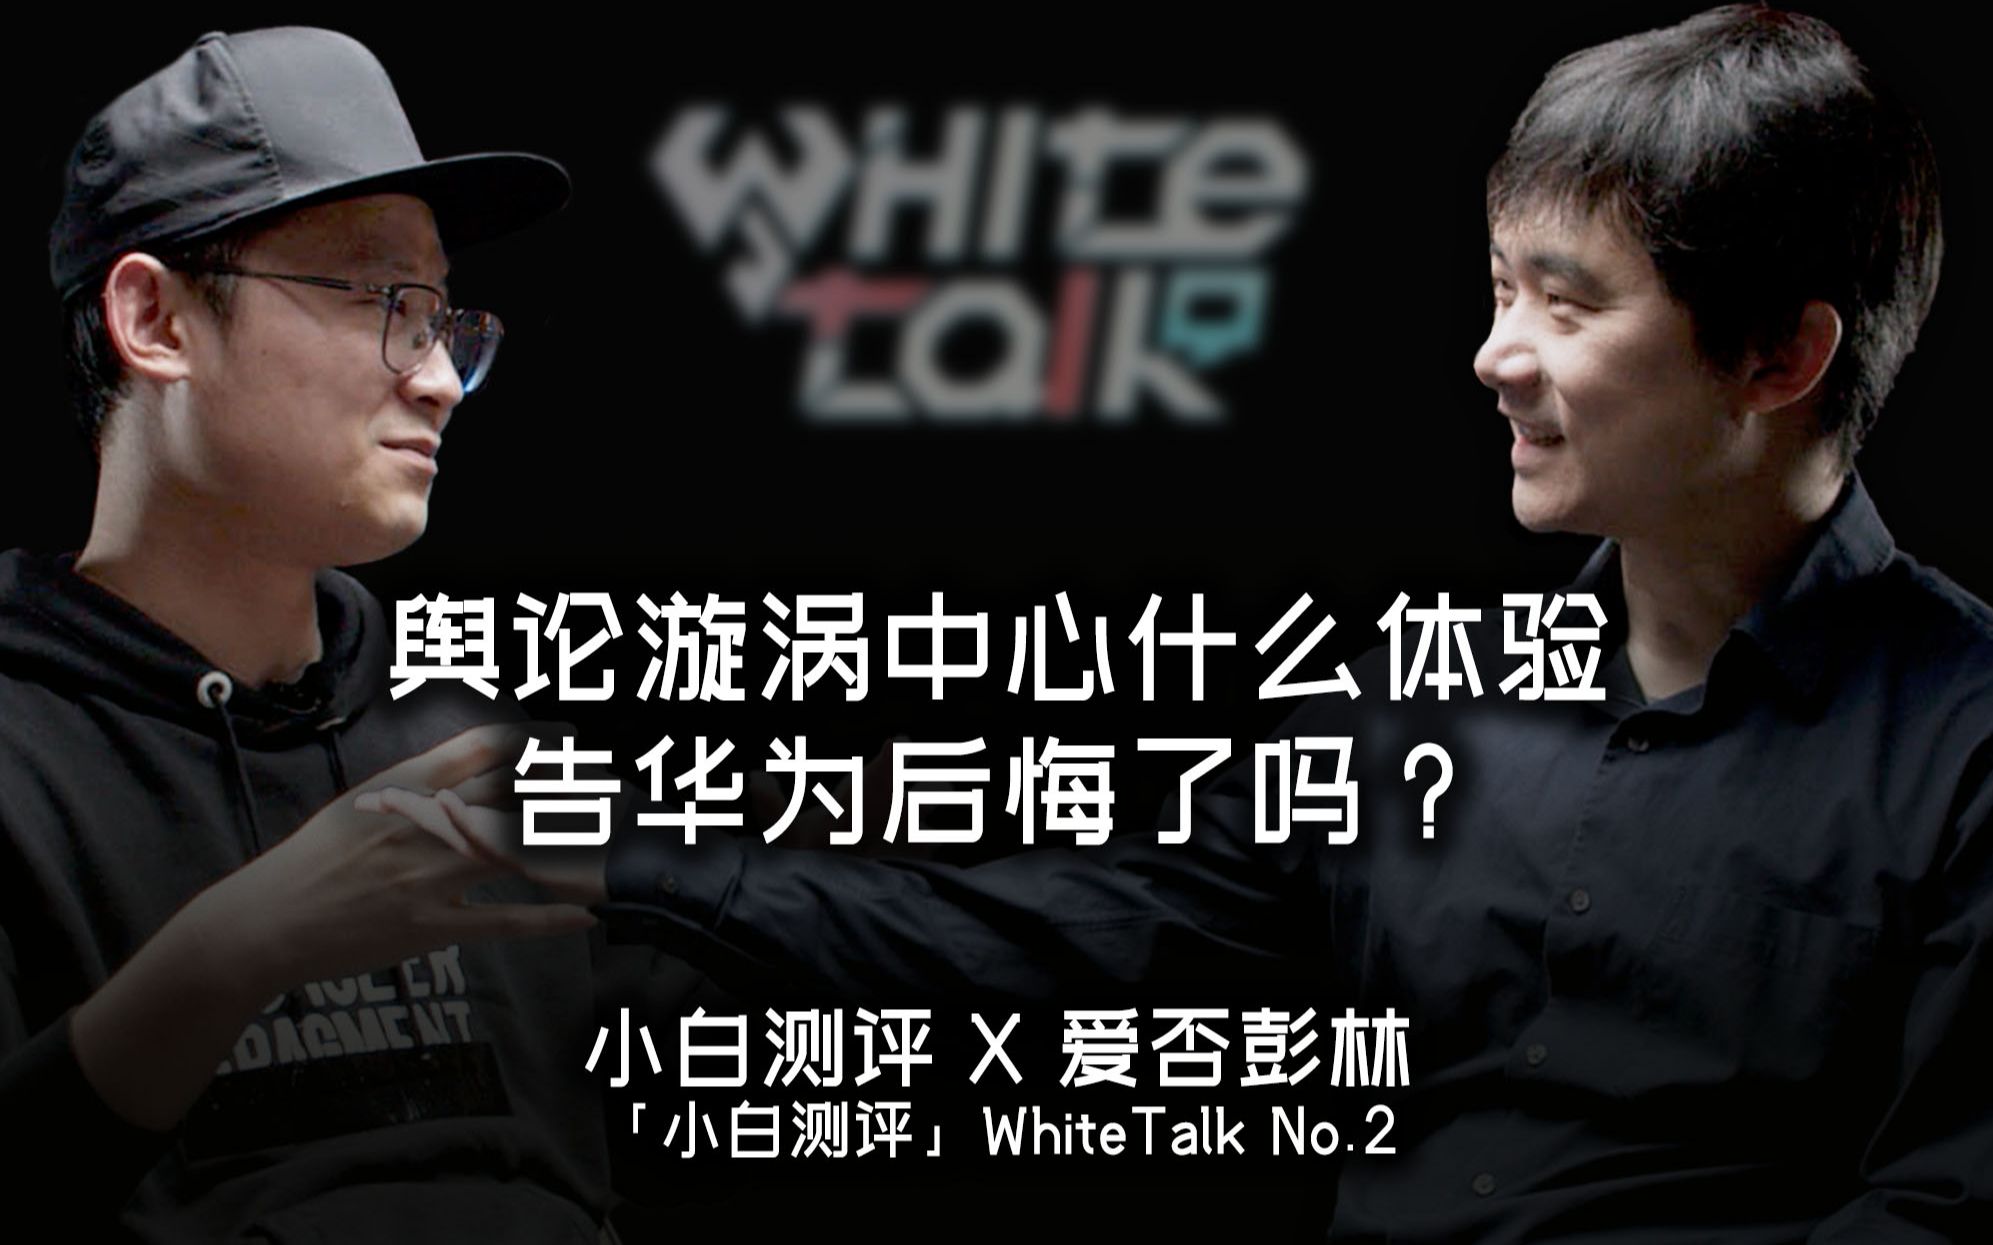 【WhiteTalk第一季】No.2 “告华为后悔了么？” 与爱否彭林聊身在舆论漩涡中心是什么体验？